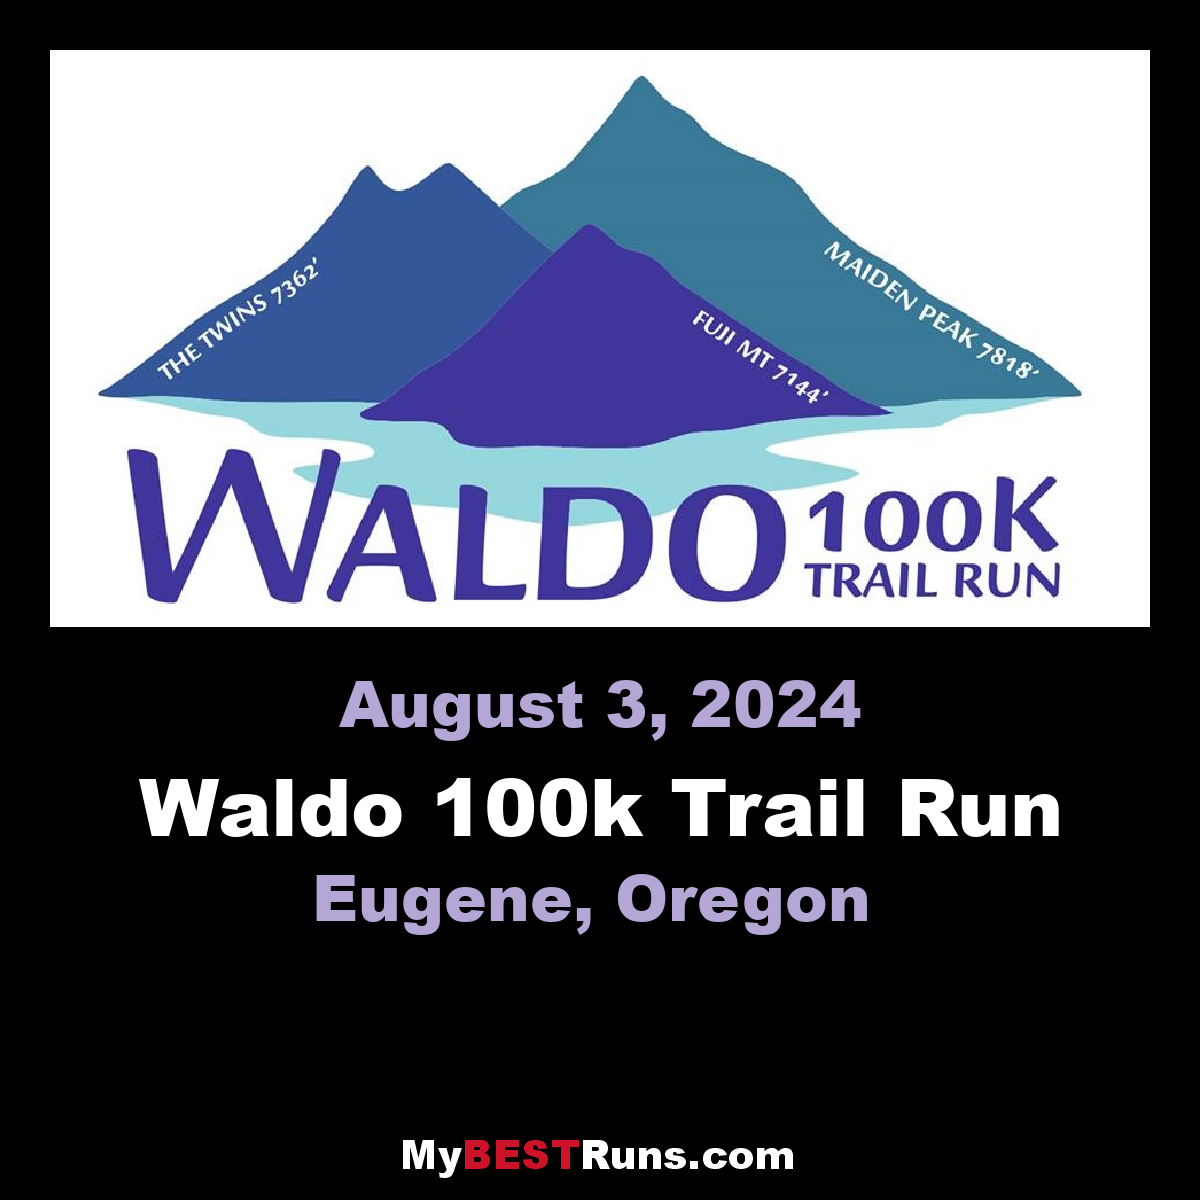 Waldo 100k Trail Run Eugene, Oregon 8/22/2020 My BEST Runs